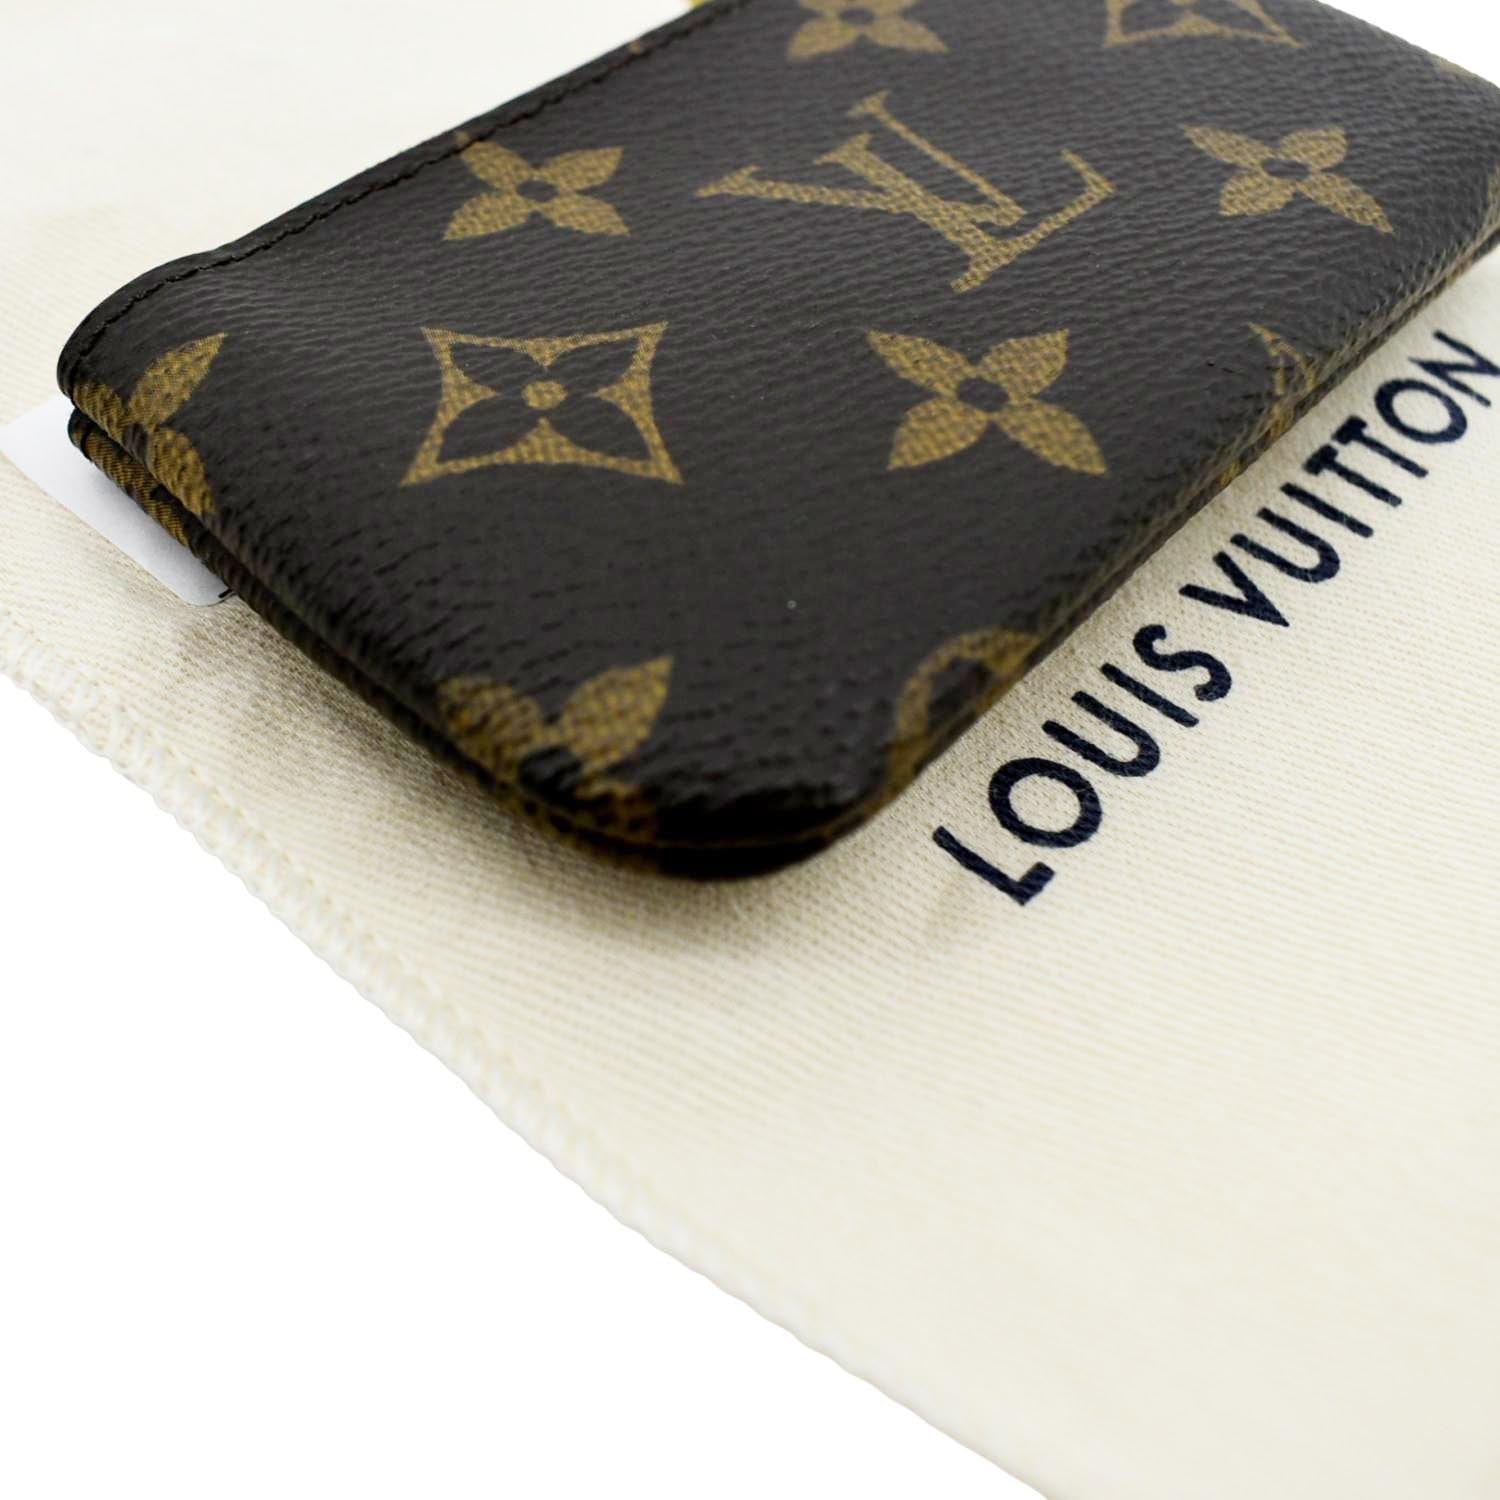 Shop Louis Vuitton MONOGRAM Monogram Canvas Logo Coin Cases by